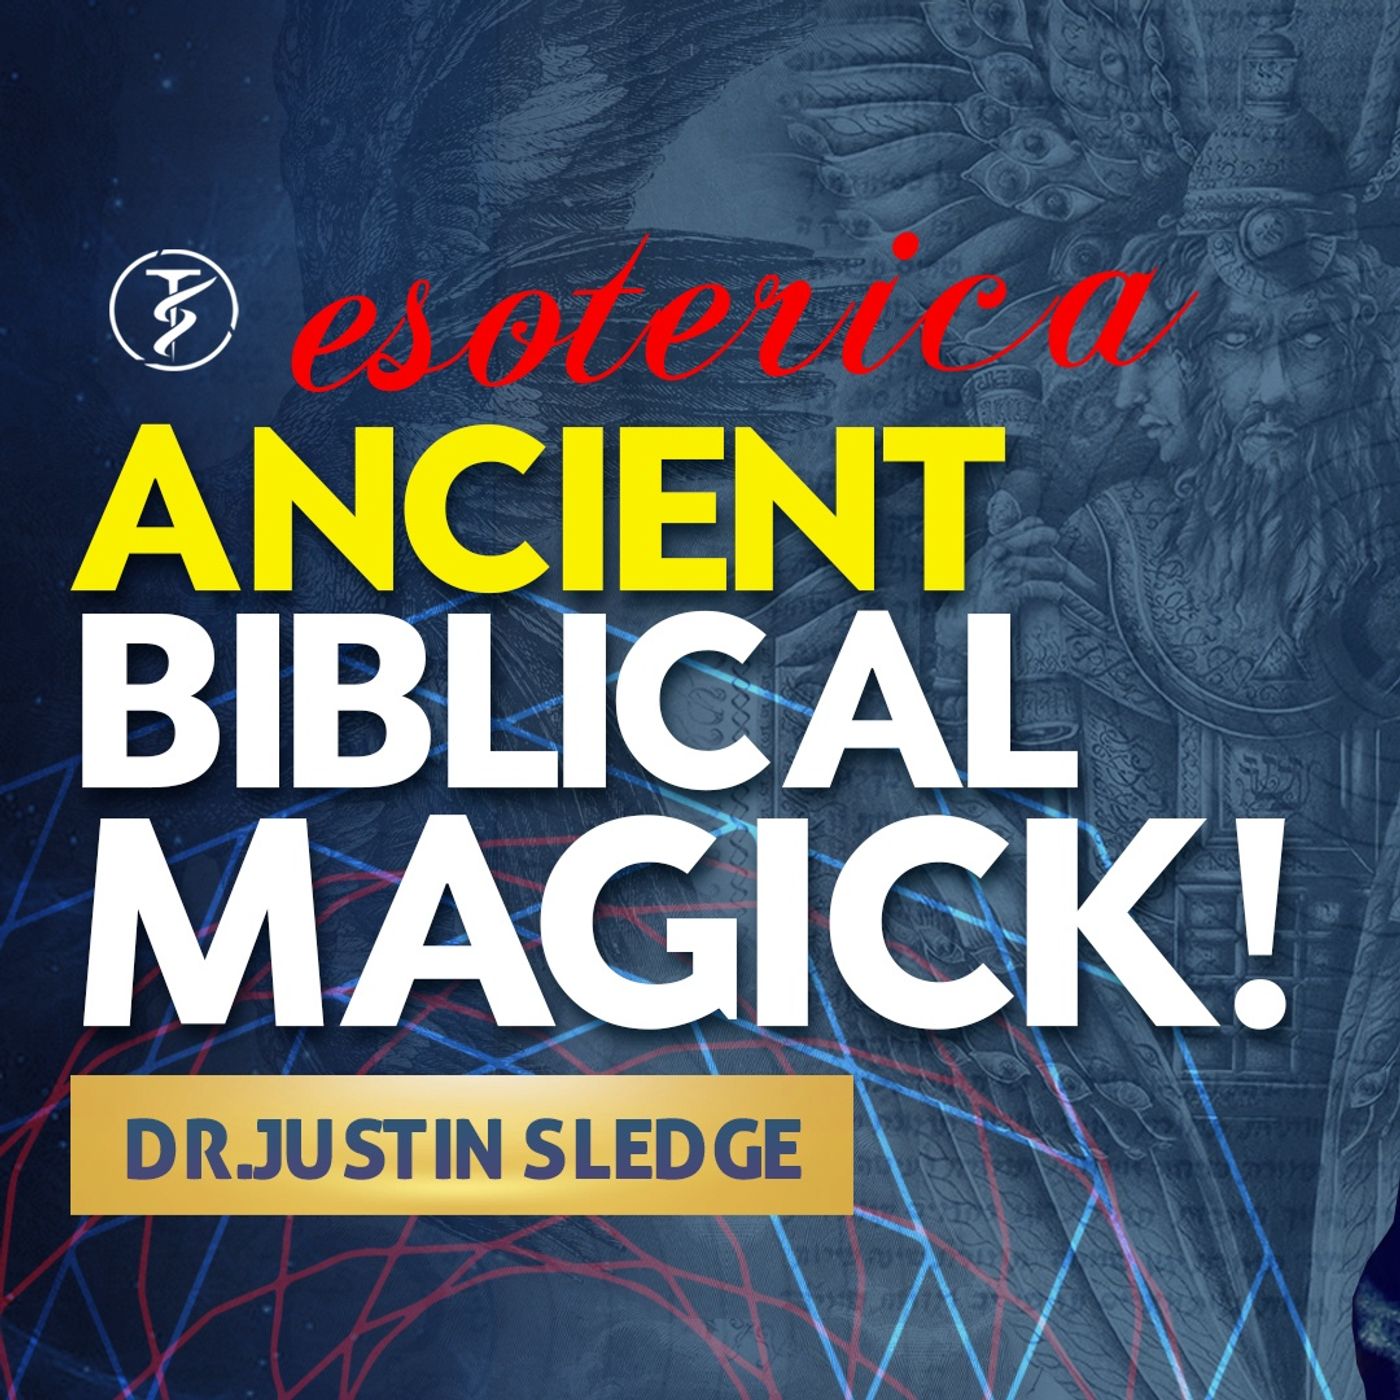 Ancient Biblical Magick and Mysticism — Esoterica — Dr.Justin Sledge